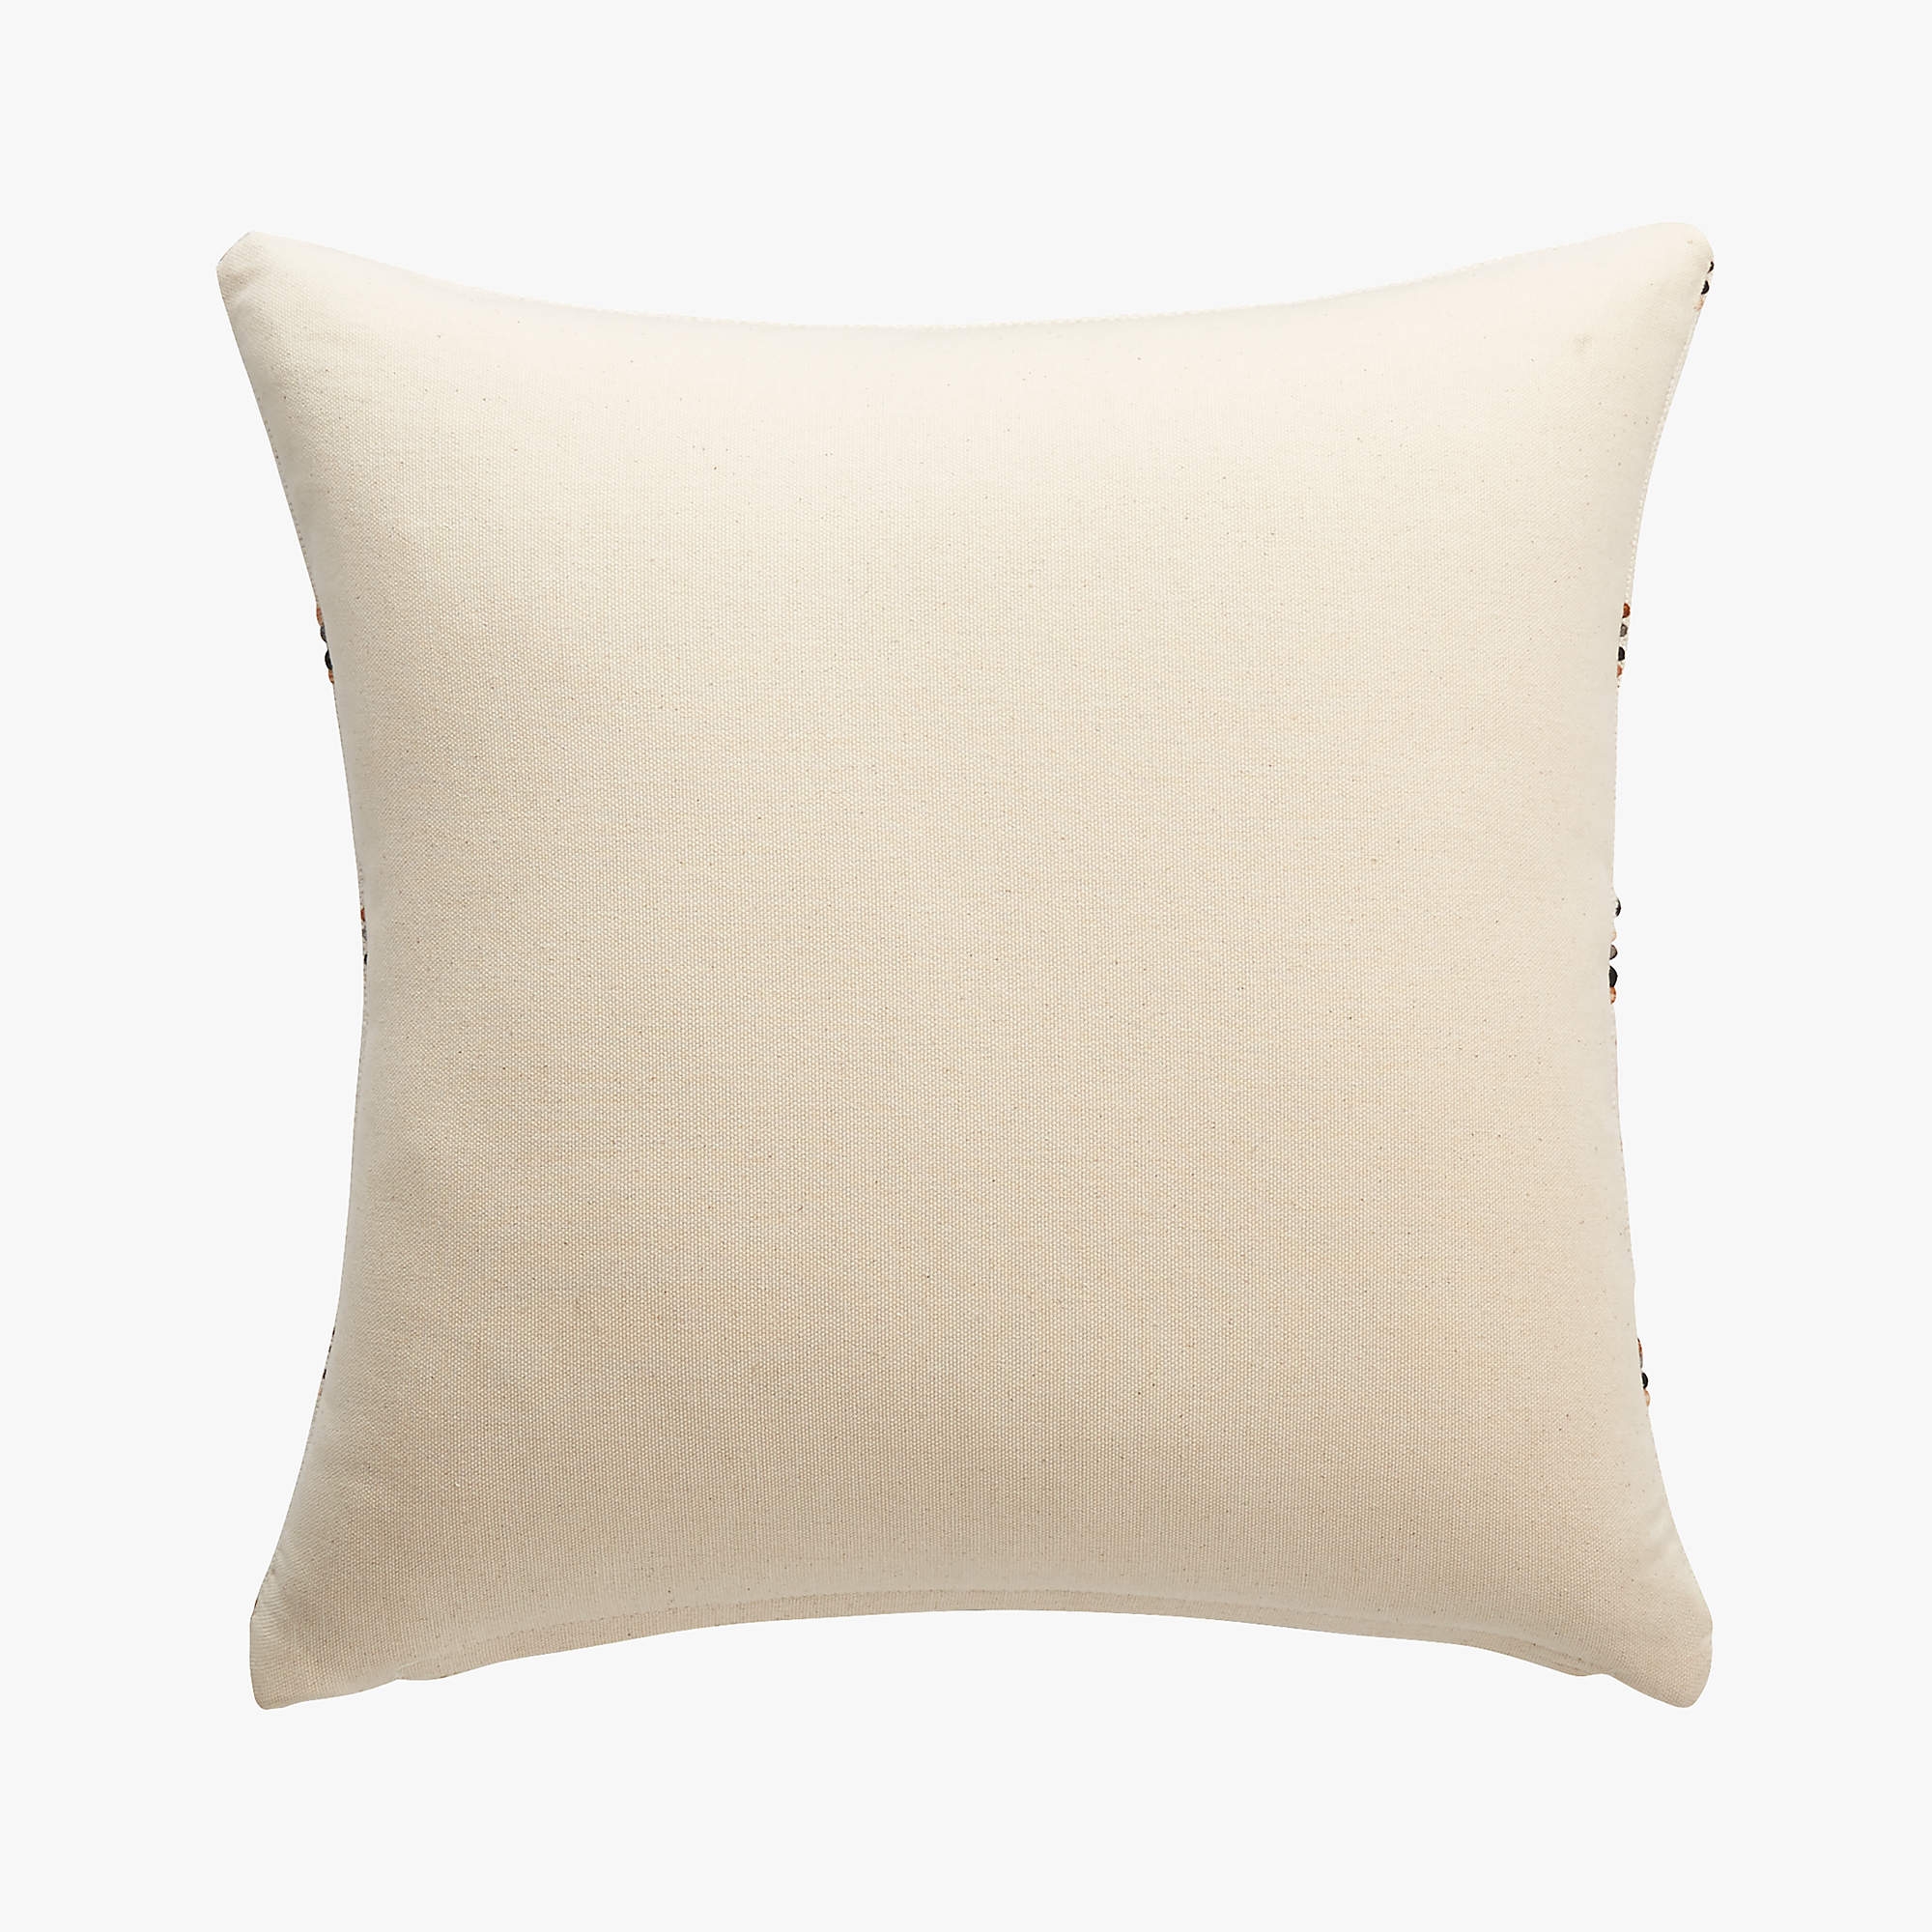 Dorado Handwoven Pillow, Down-Alternative Insert, 16" x 16" - Image 2